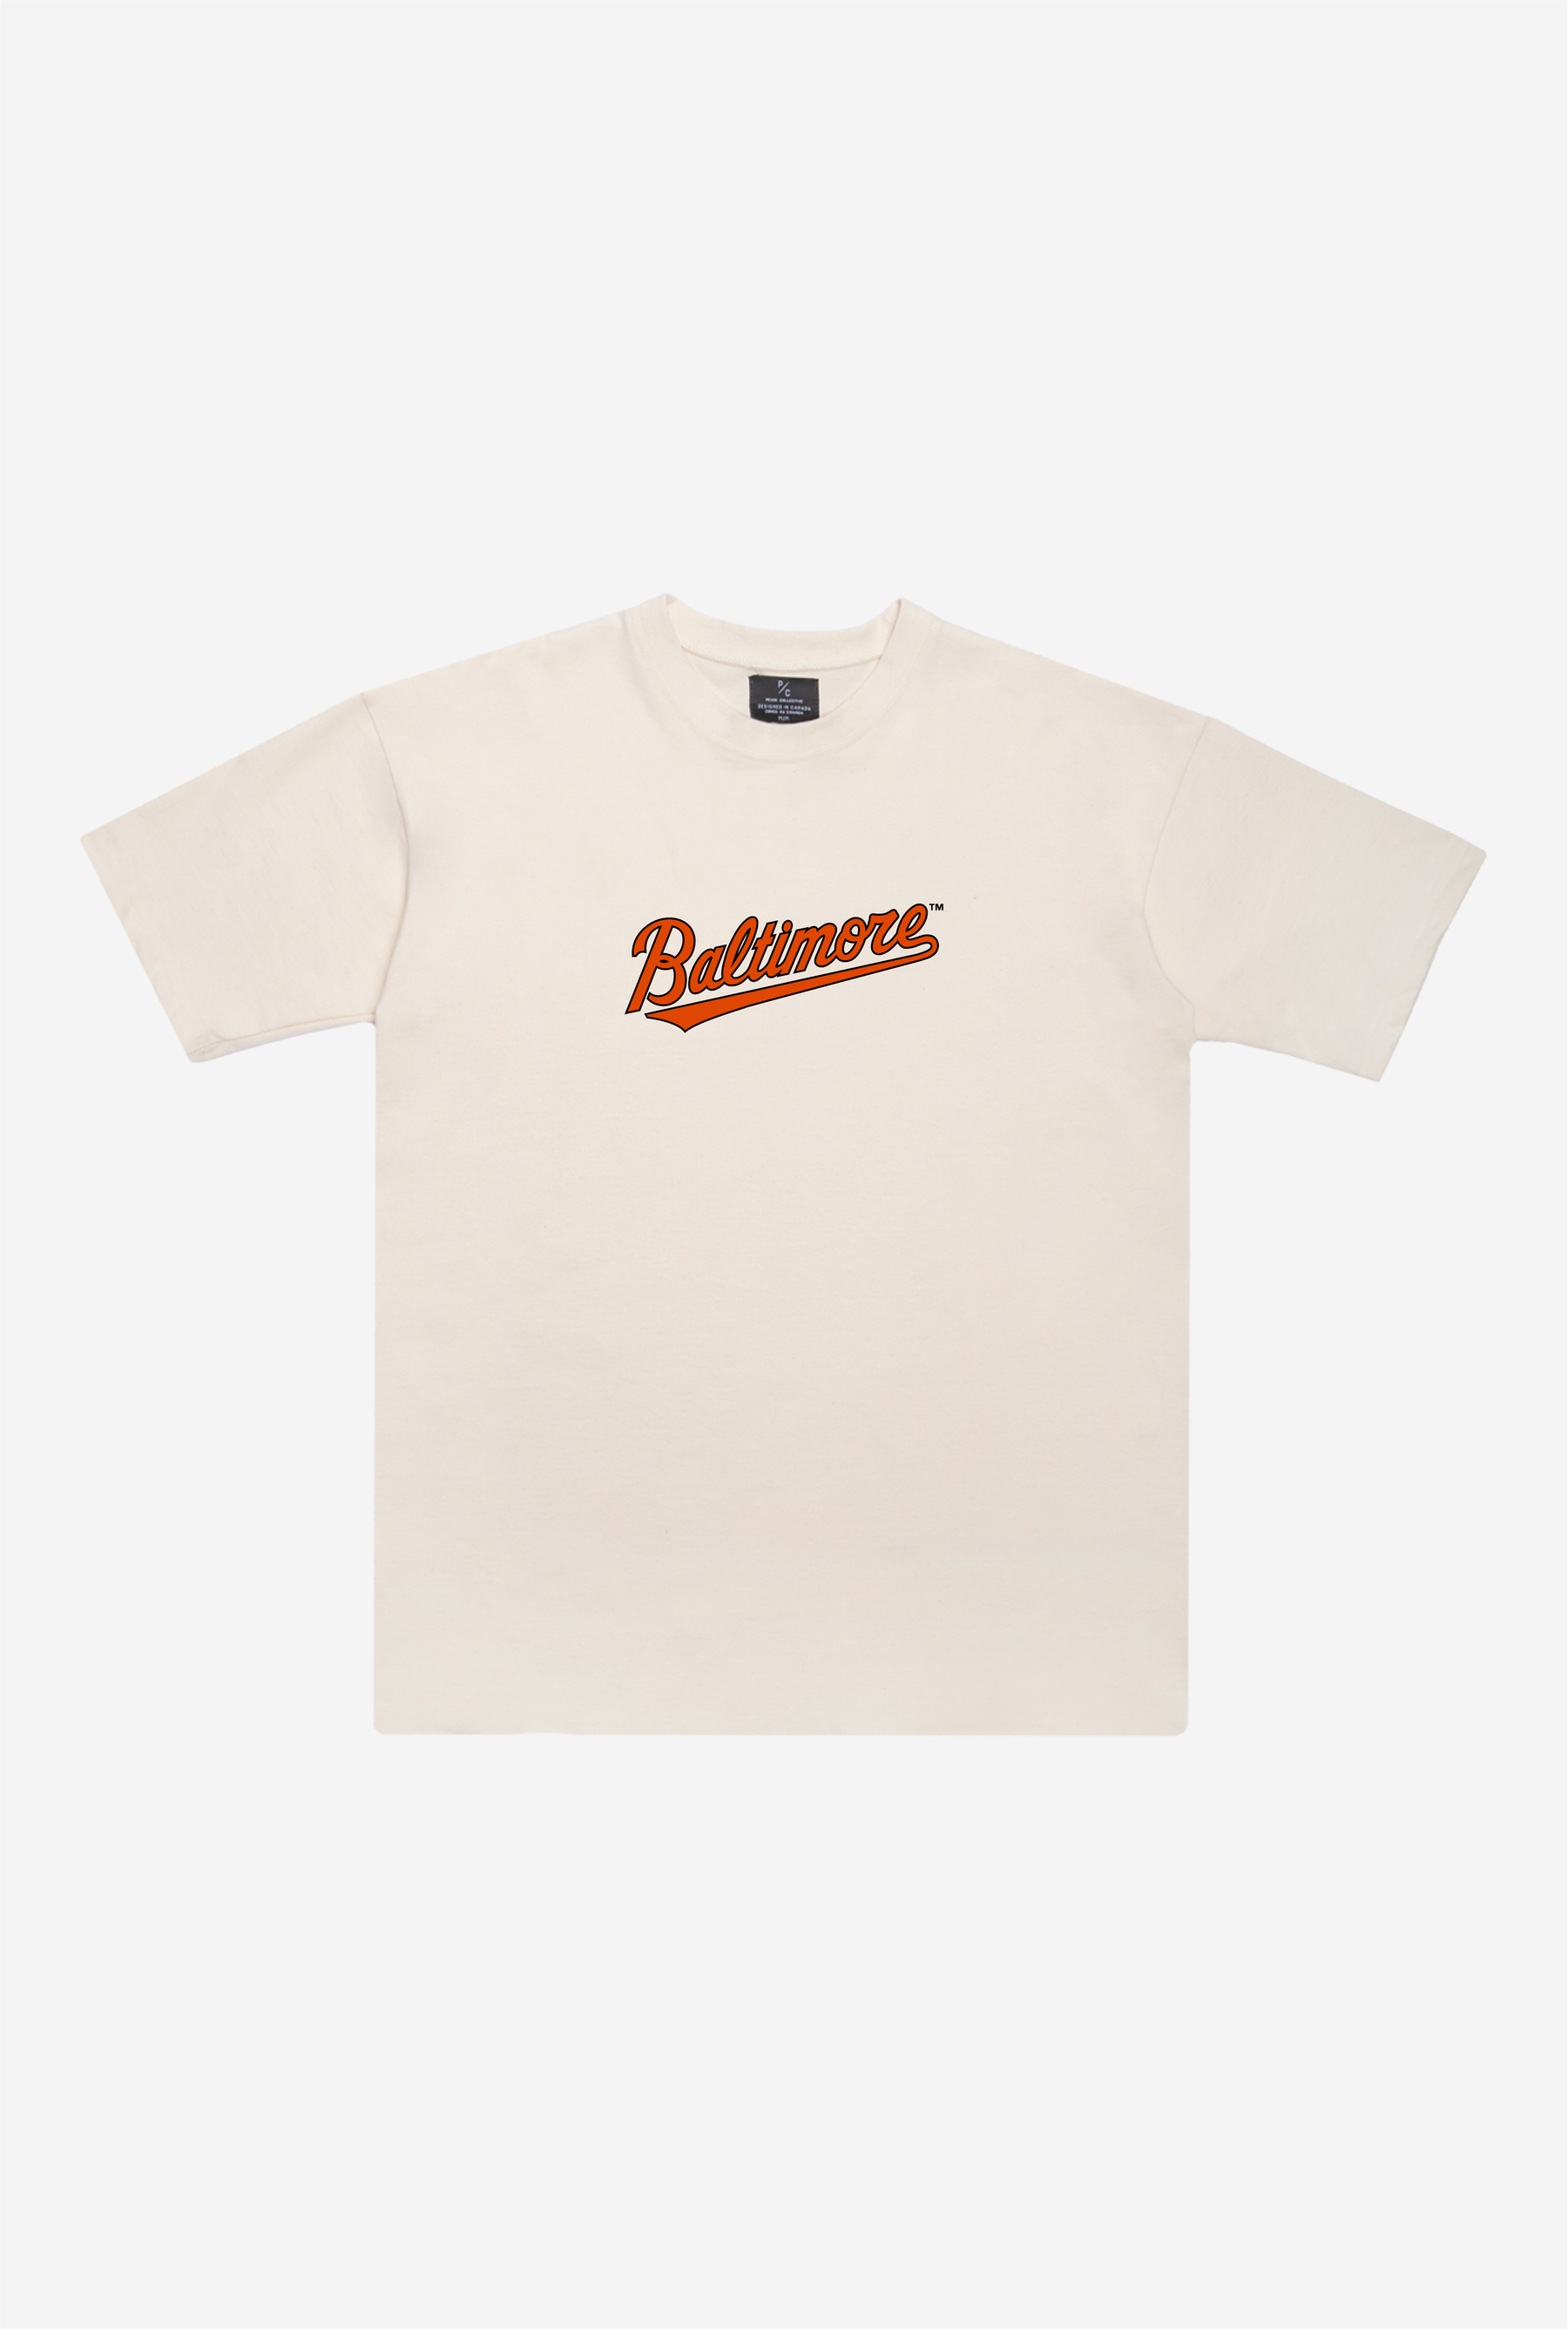 Baltimore Orioles Heavyweight T-Shirt - Natural